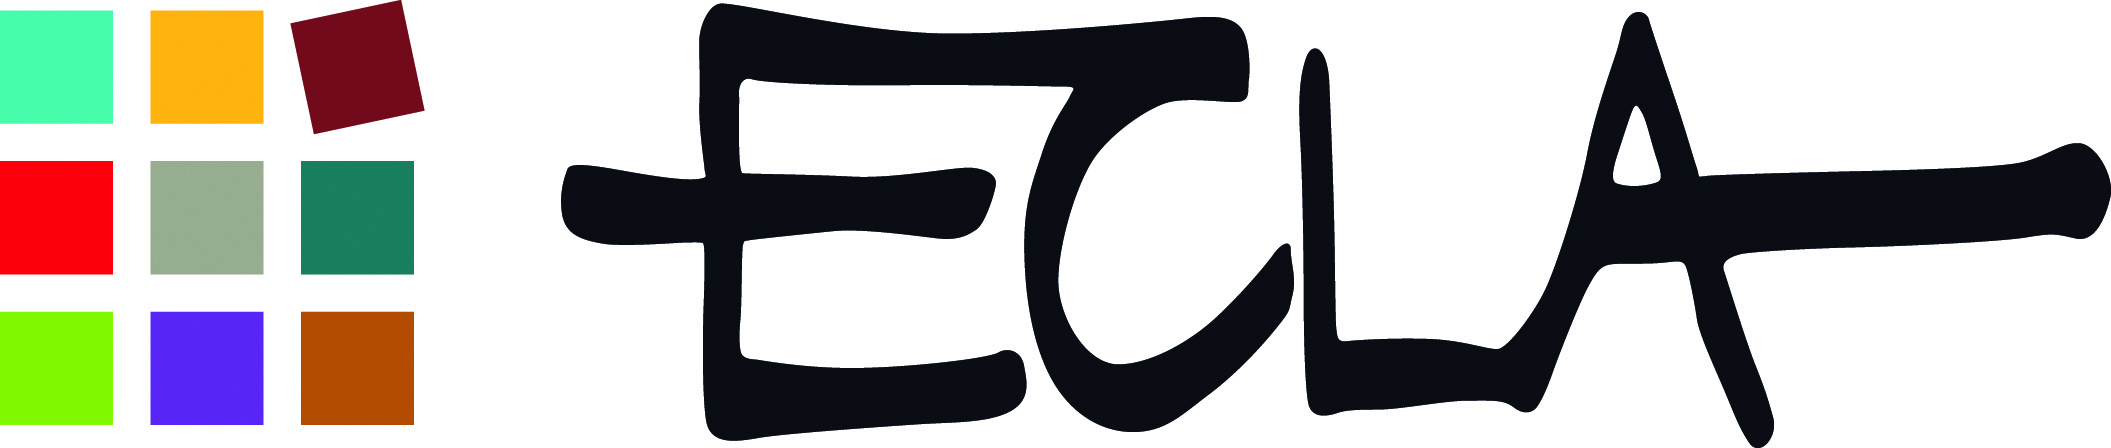 ecla-logo 2008 couleur copie_1.jpg 